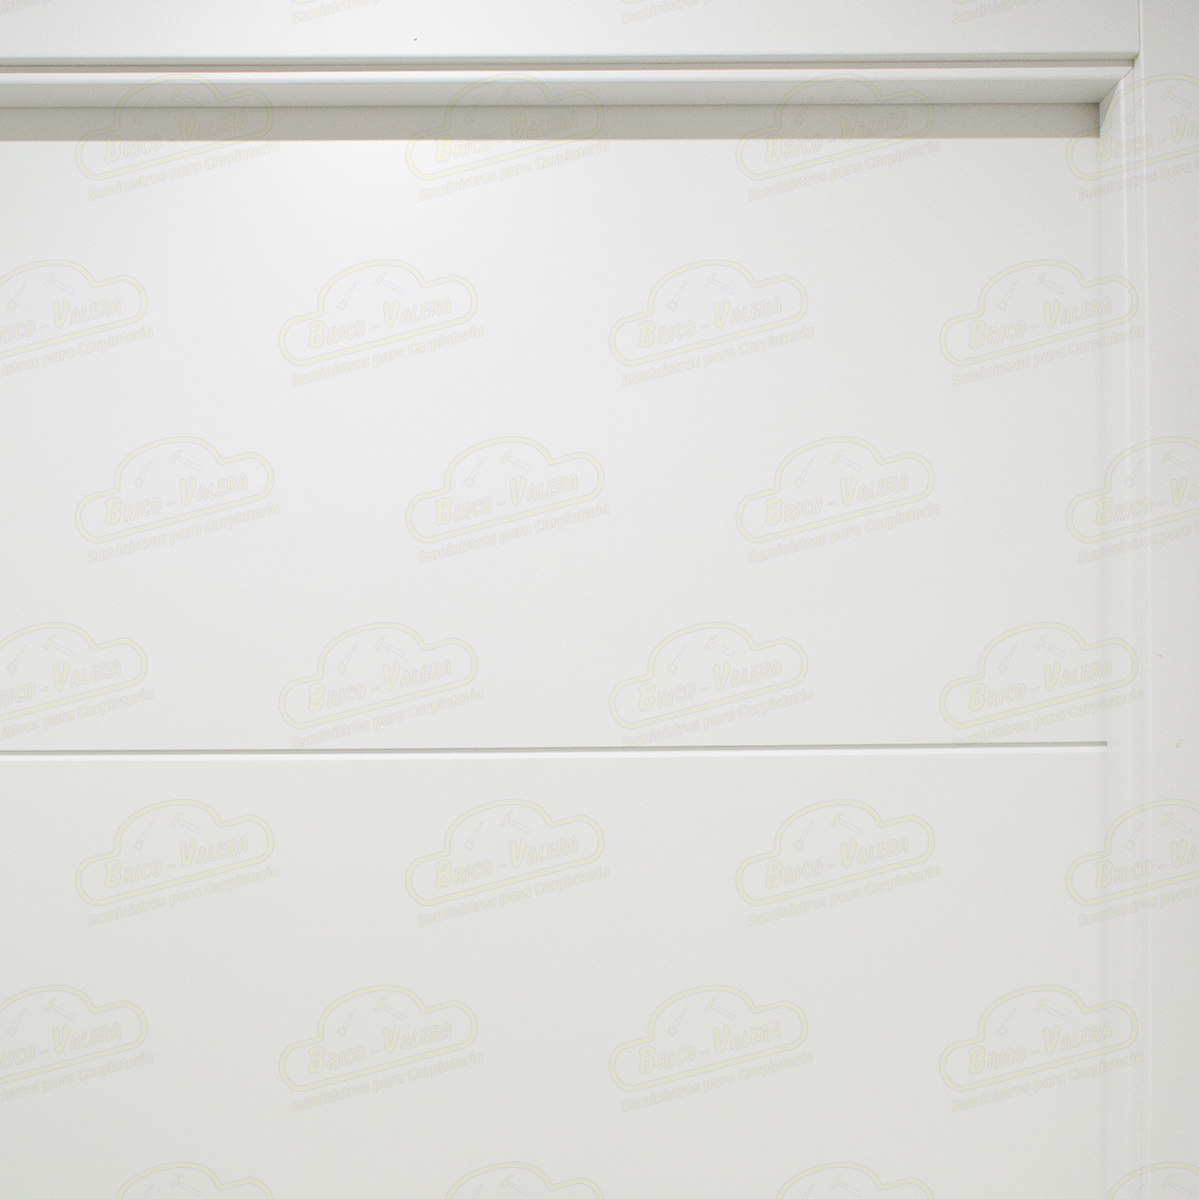 Puerta Premium SOL-V1C Lacada Blanca de Interior en Block (Maciza)